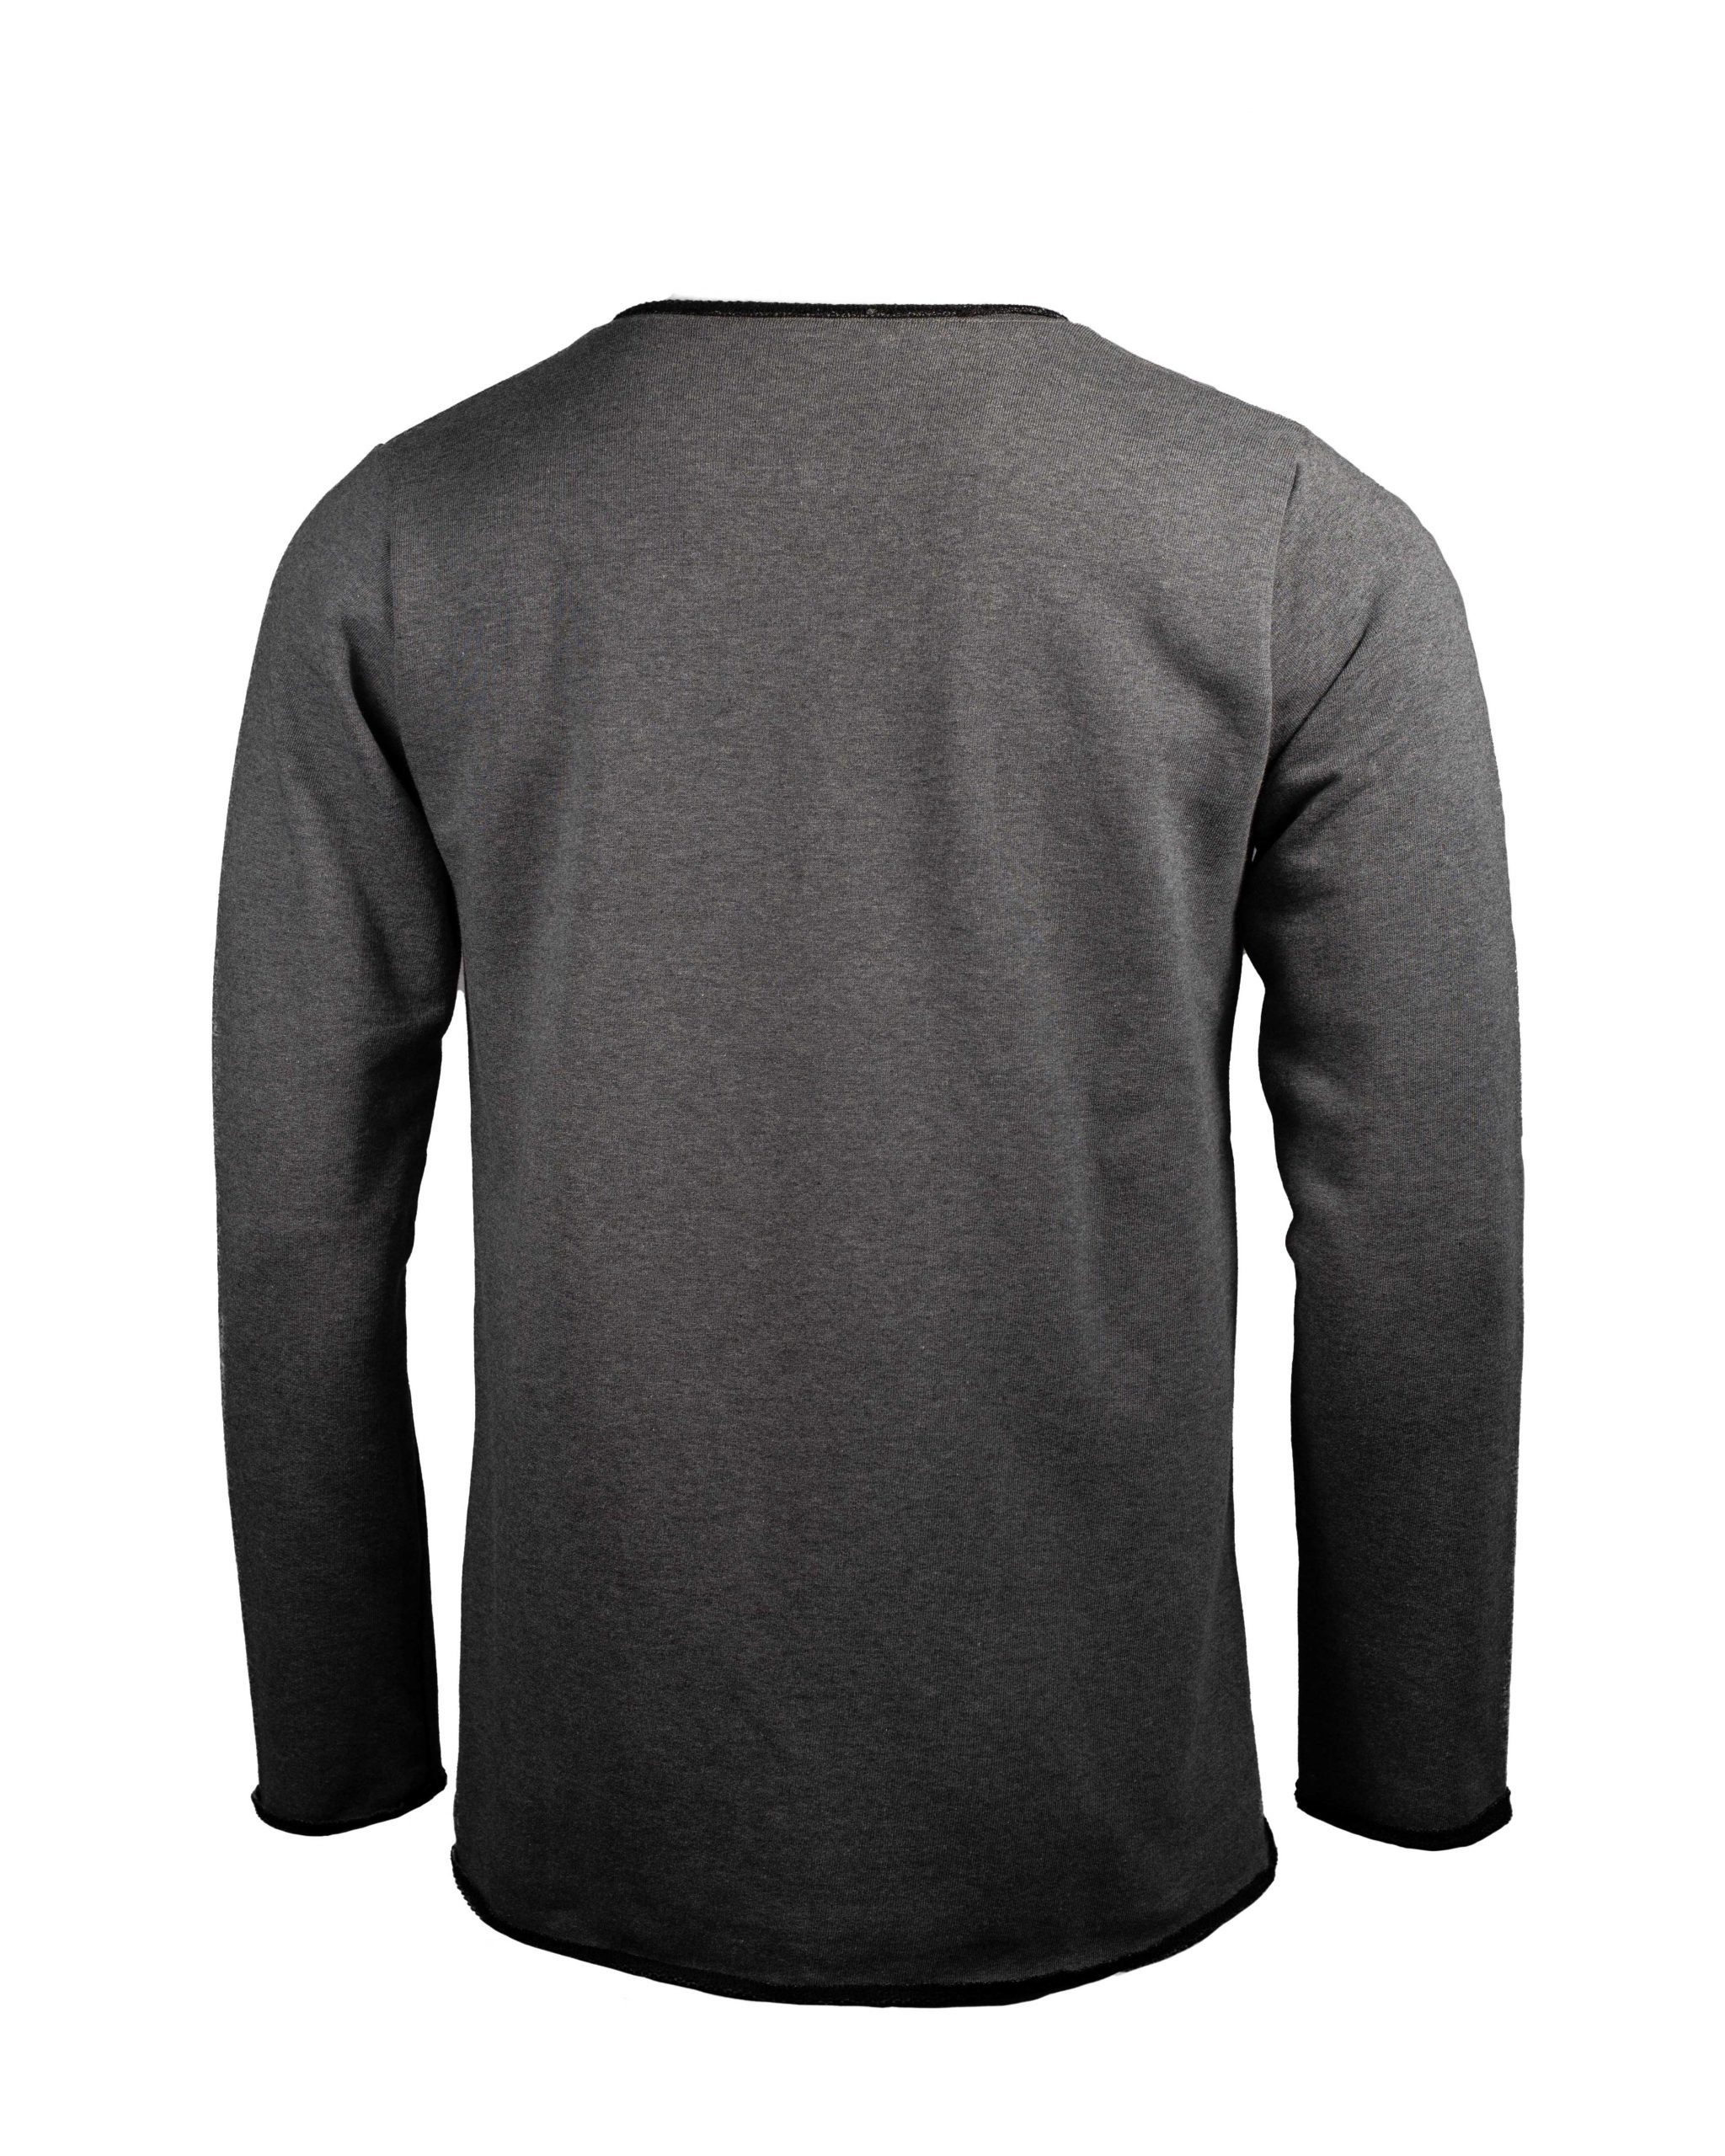 BASIC Futterfaden EMPIRE-THIRTEEN grau "EMPIRE" schwarzer SWEATER MEN Sweater